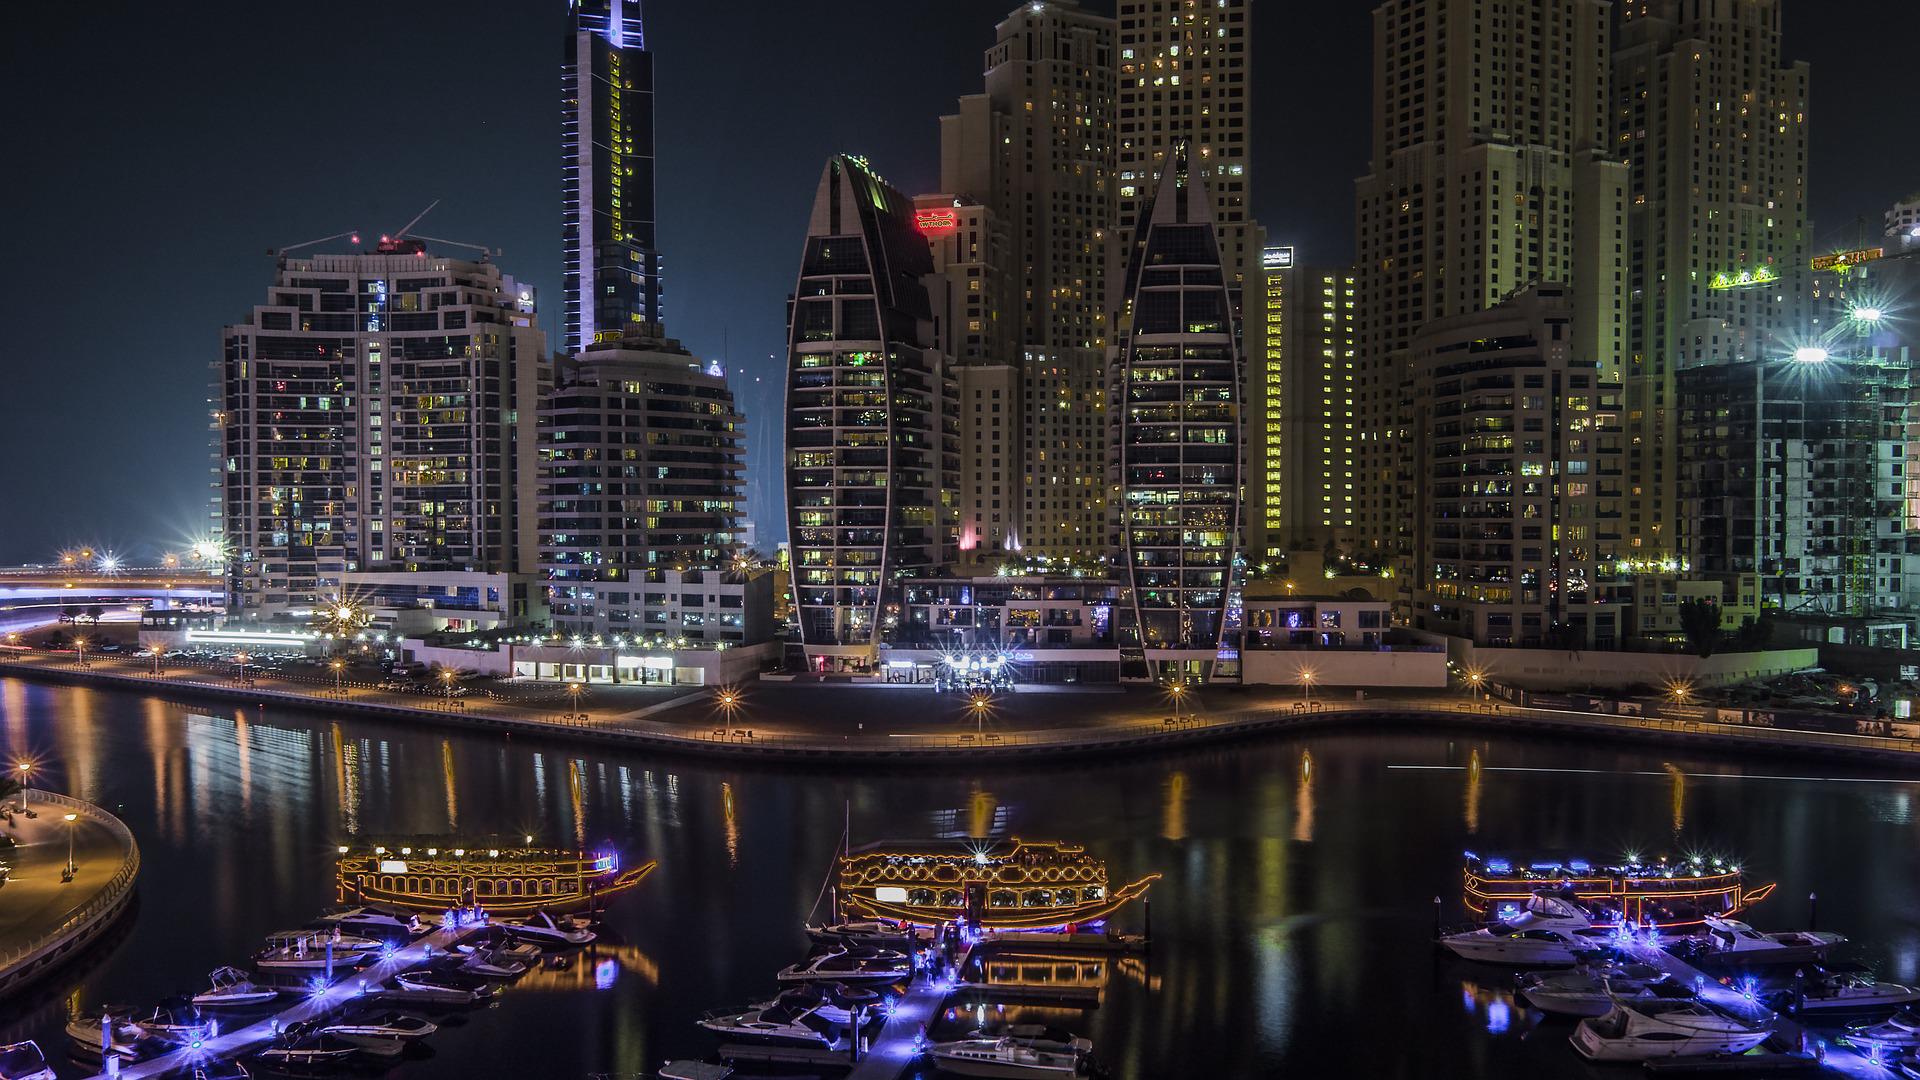 Dubai Unveils Crypto Marketing Rules To Protect Investors